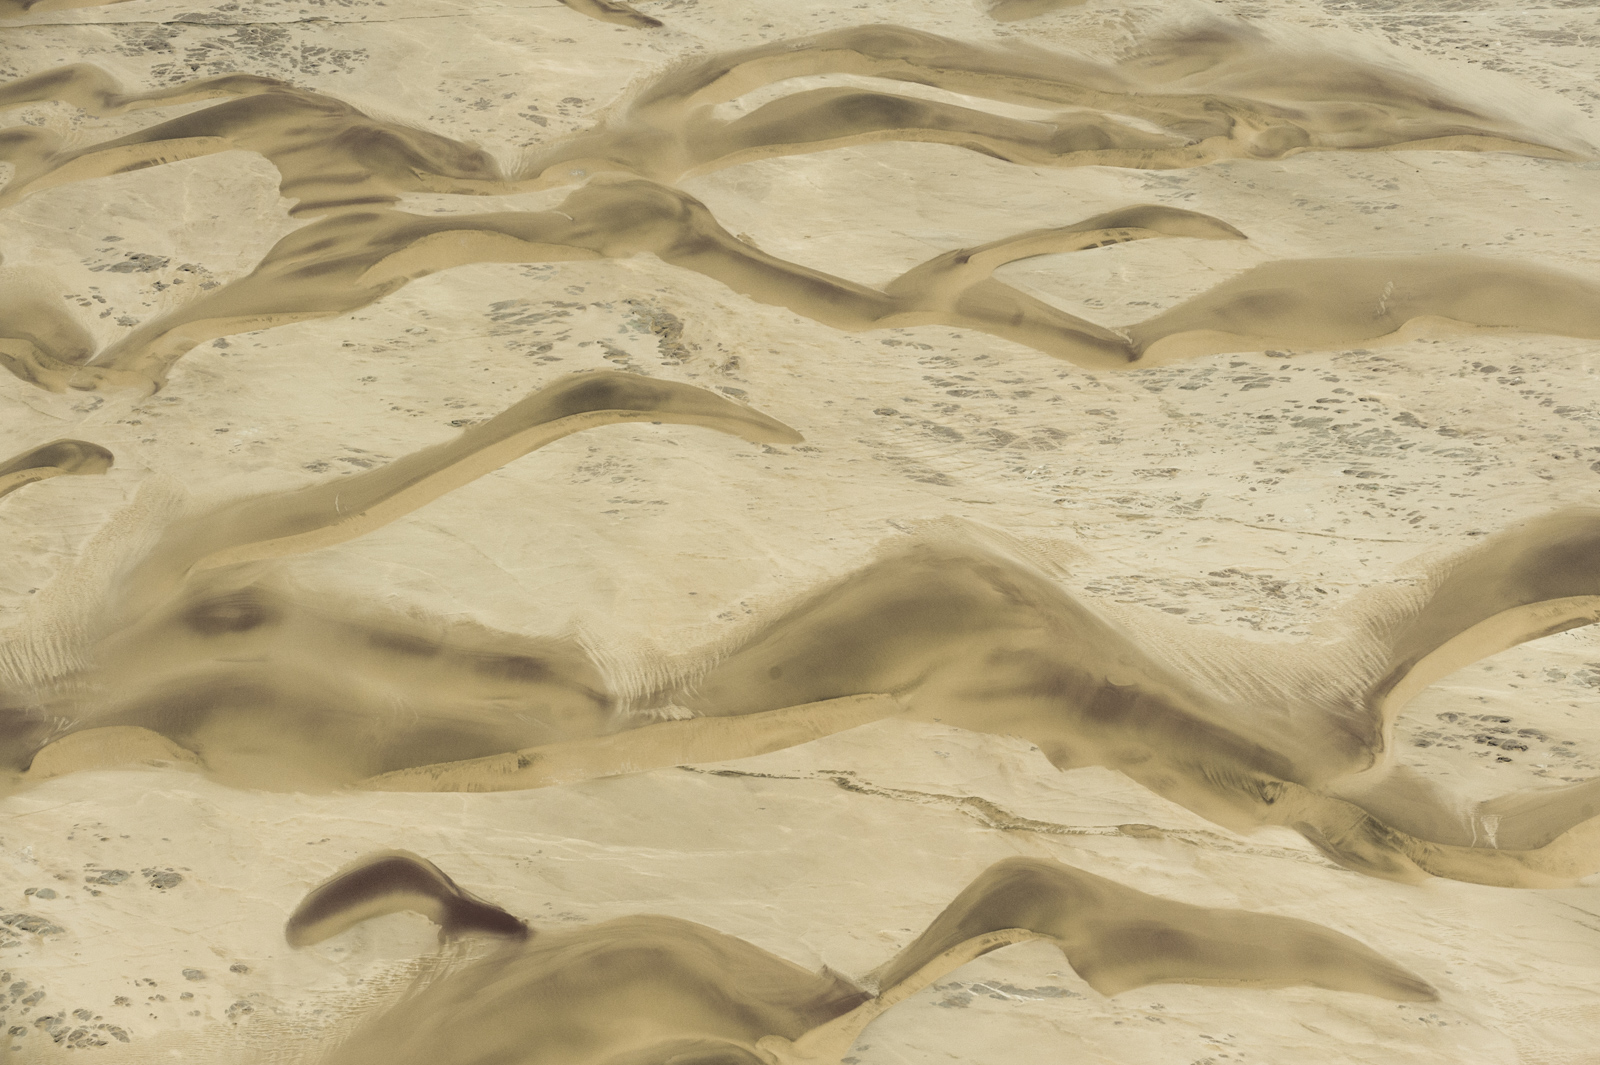 Barchan sand dunes, Skeleton Coast, Namibia